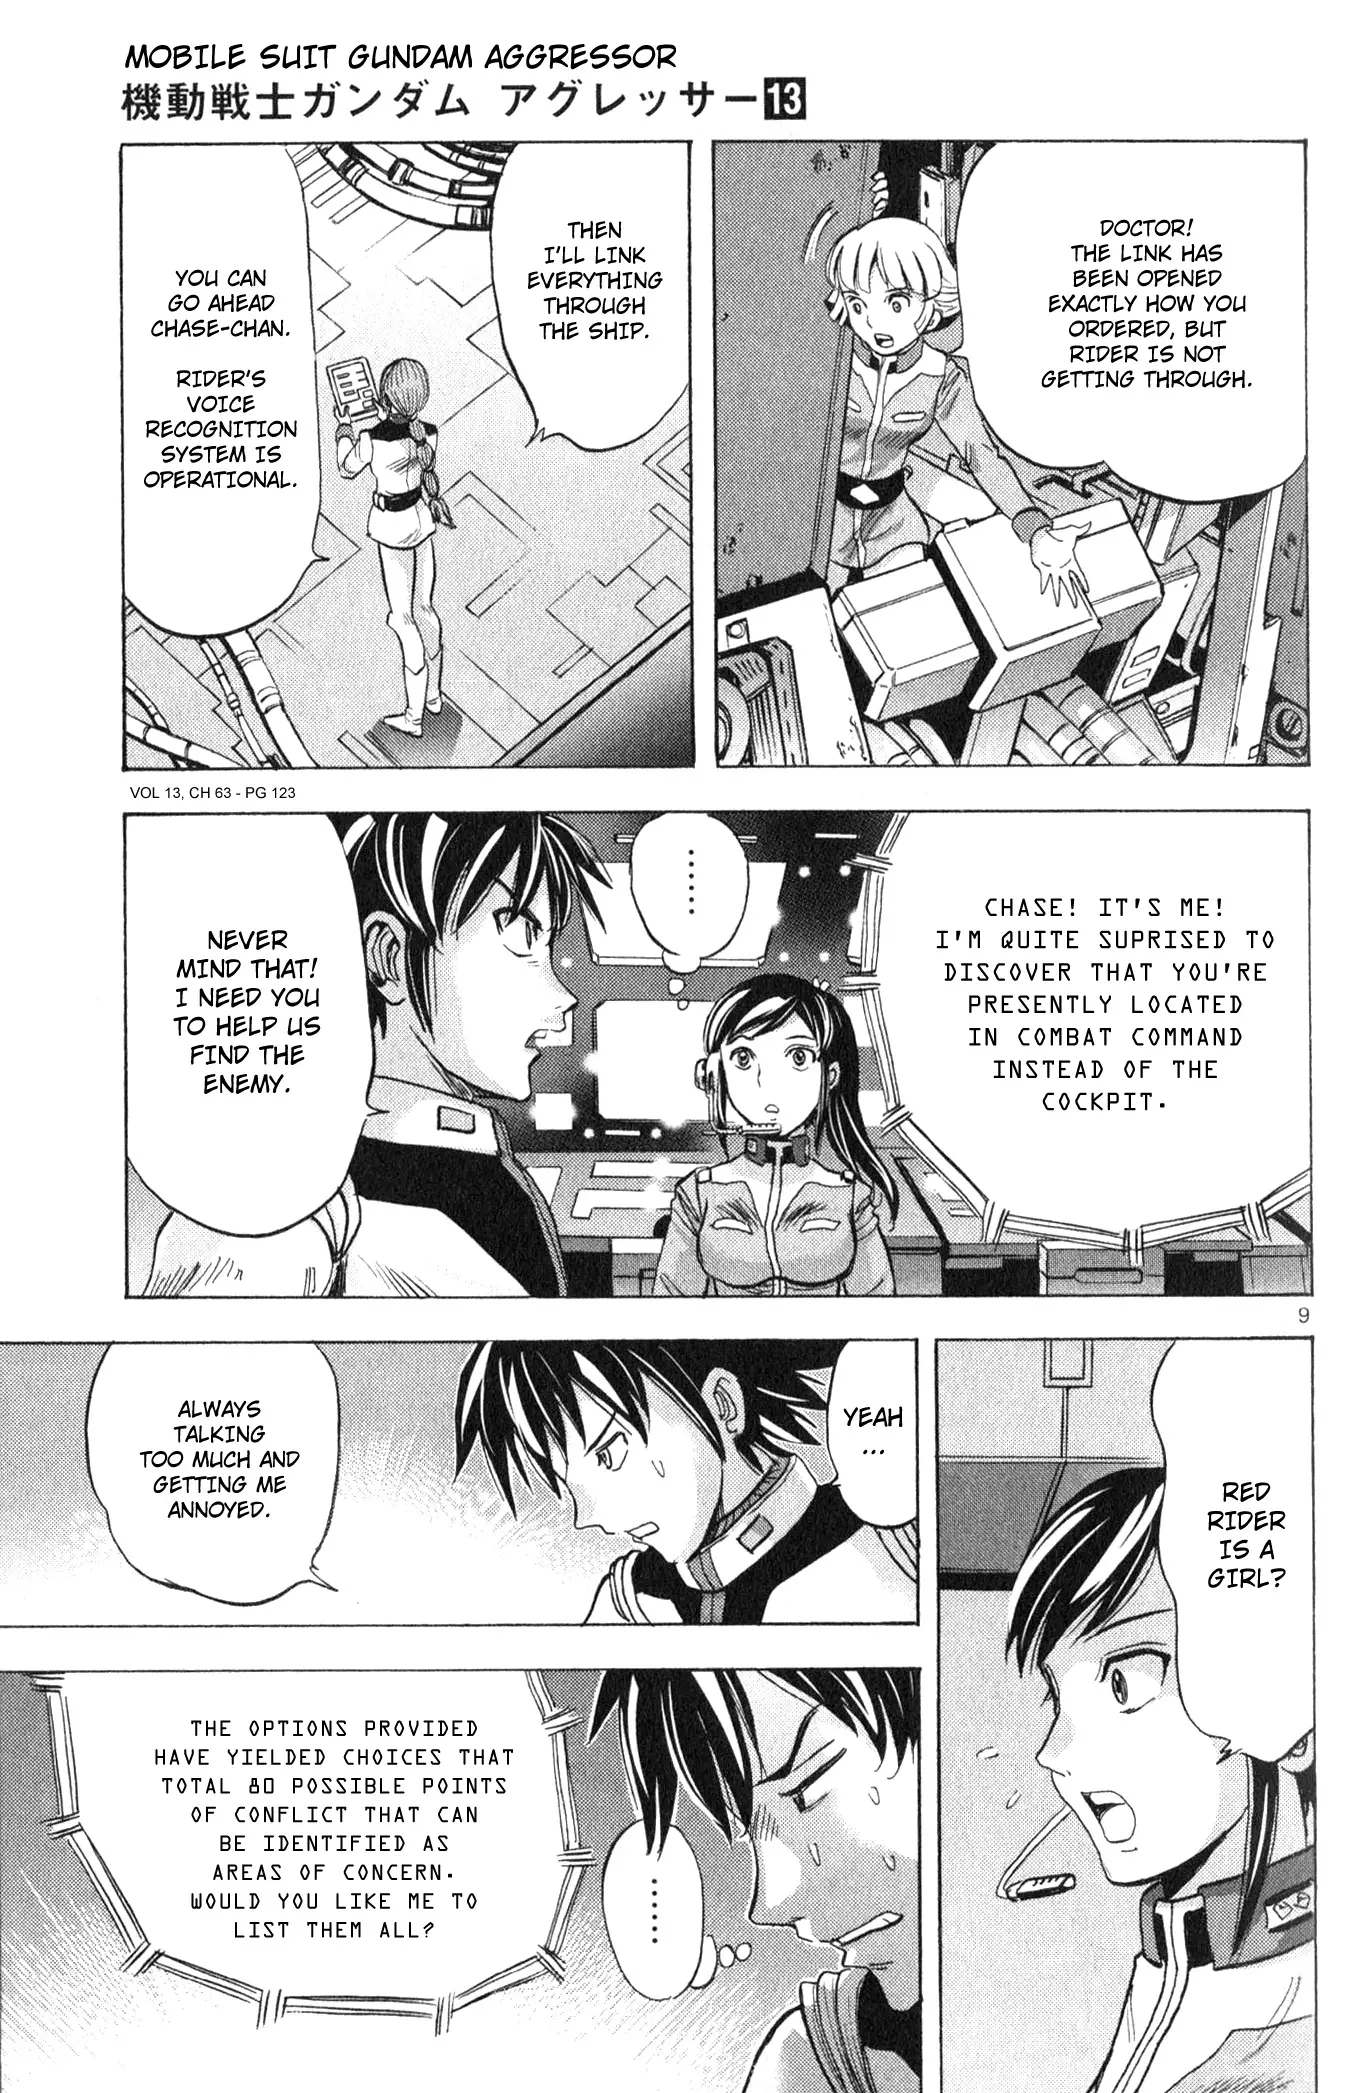 Mobile Suit Gundam Aggressor - 63 page 9-54481eaf